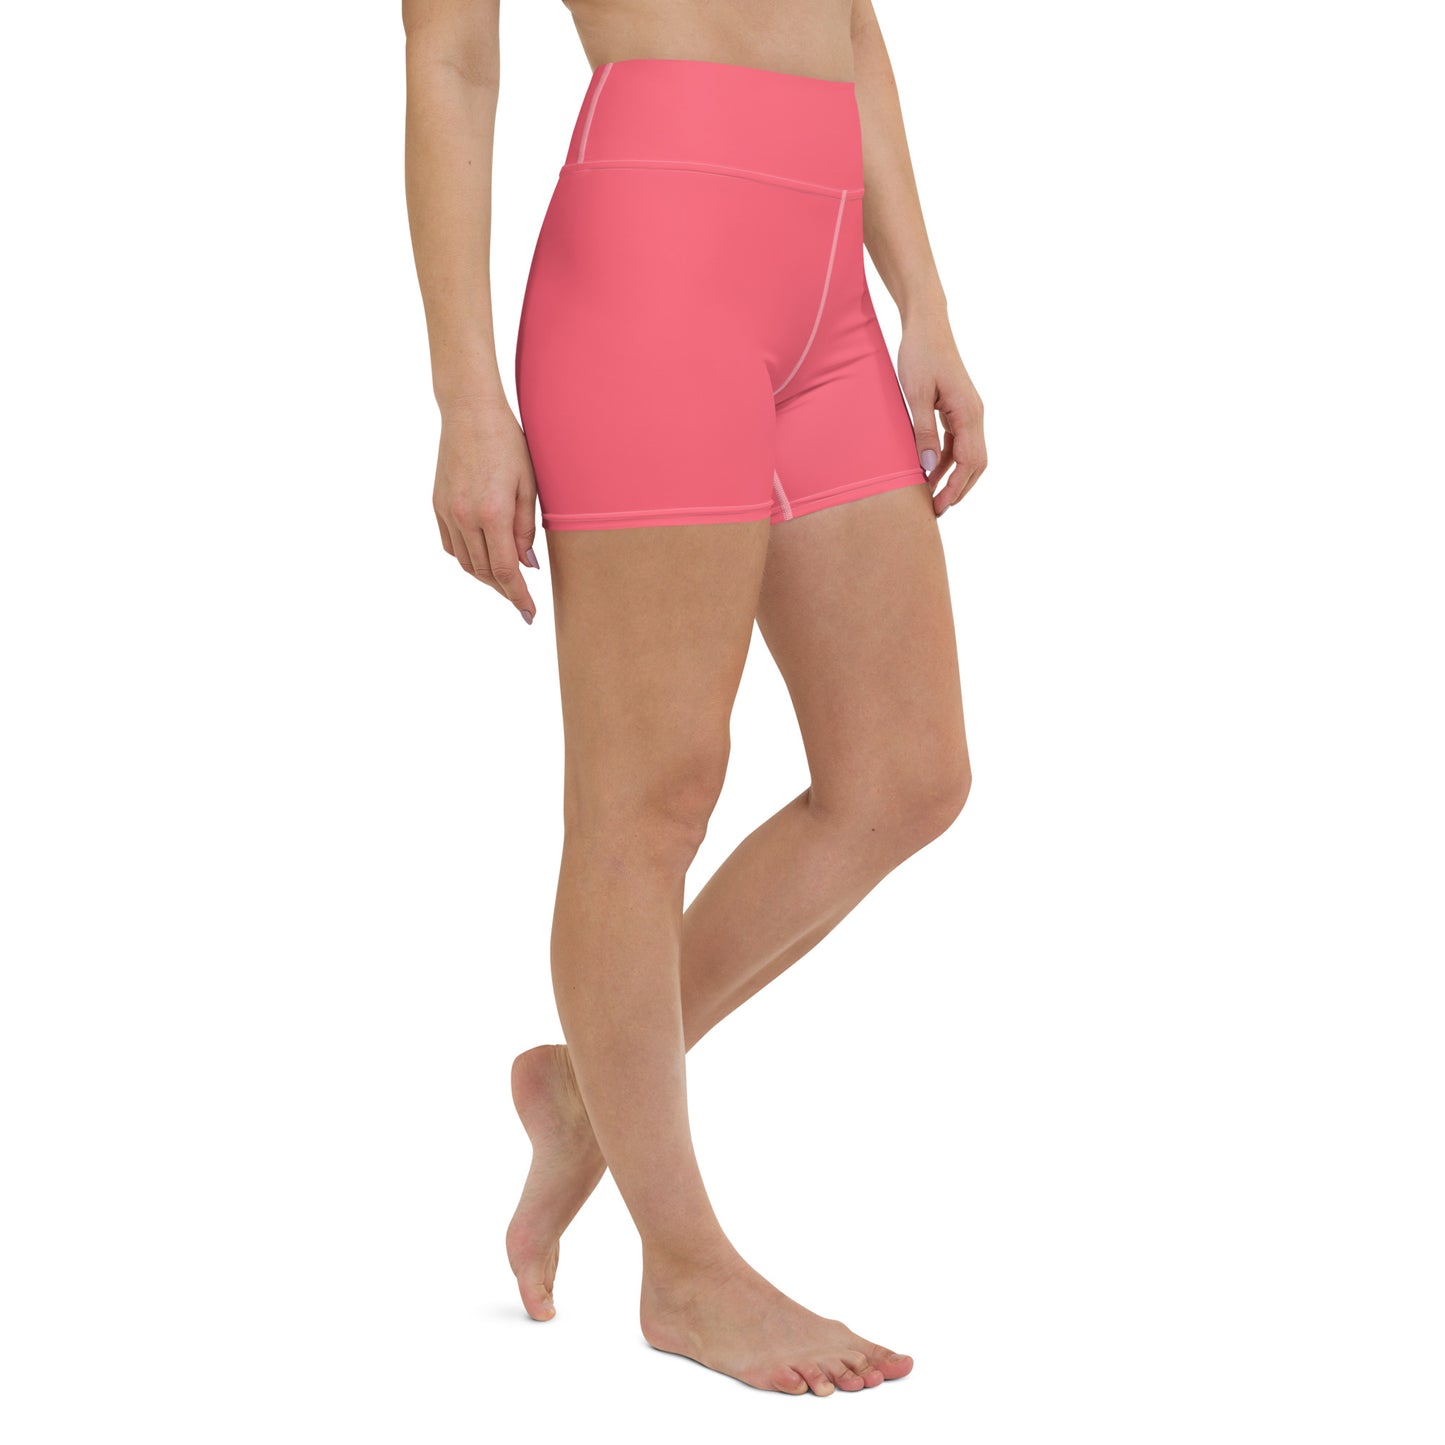 Cueva Solid Color High Waist Yoga Shorts / Bike Shorts with Inside Pocket